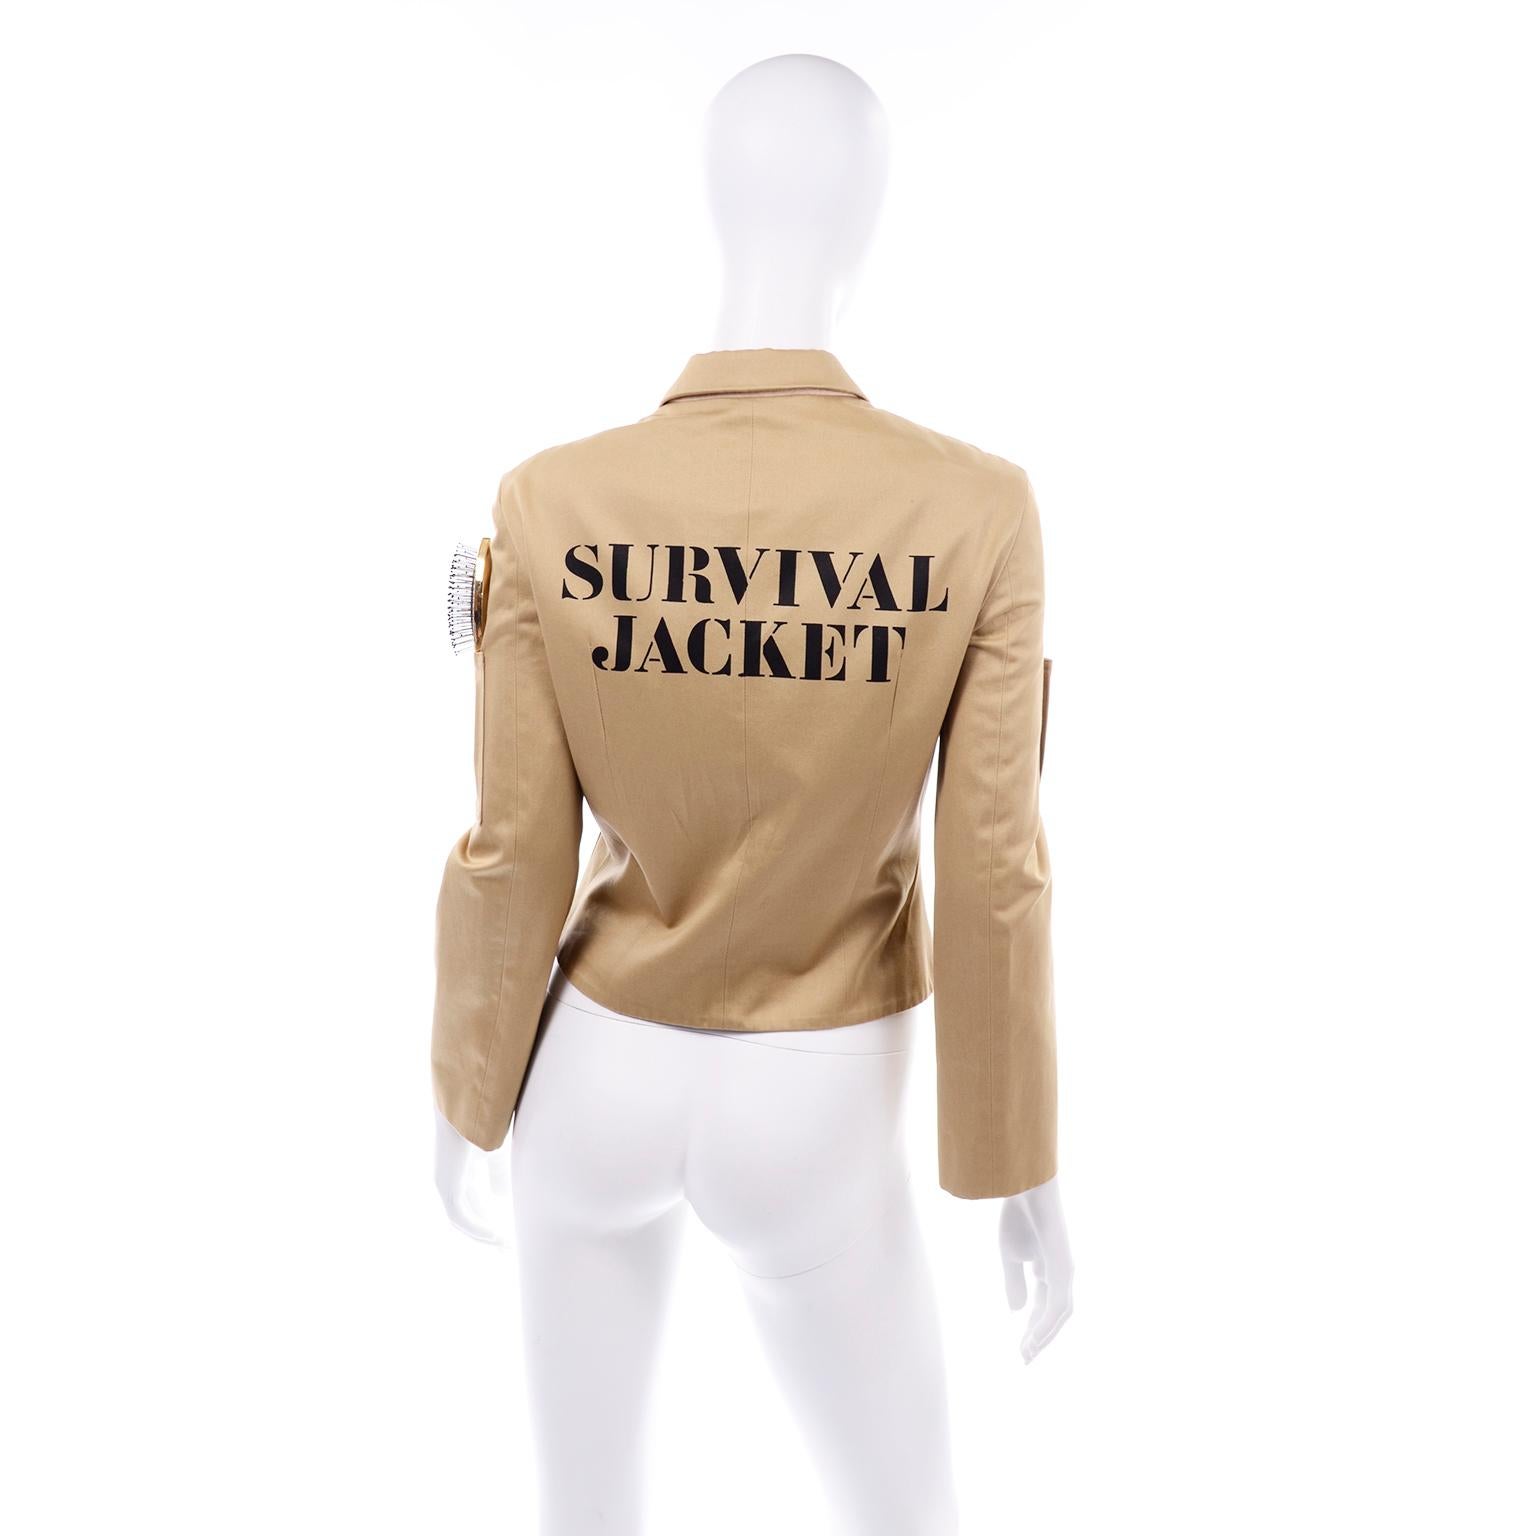 1991 Franco Moschino Couture Survival Jacke in Khaki Baumwolle Urban Jungle Tools Damen